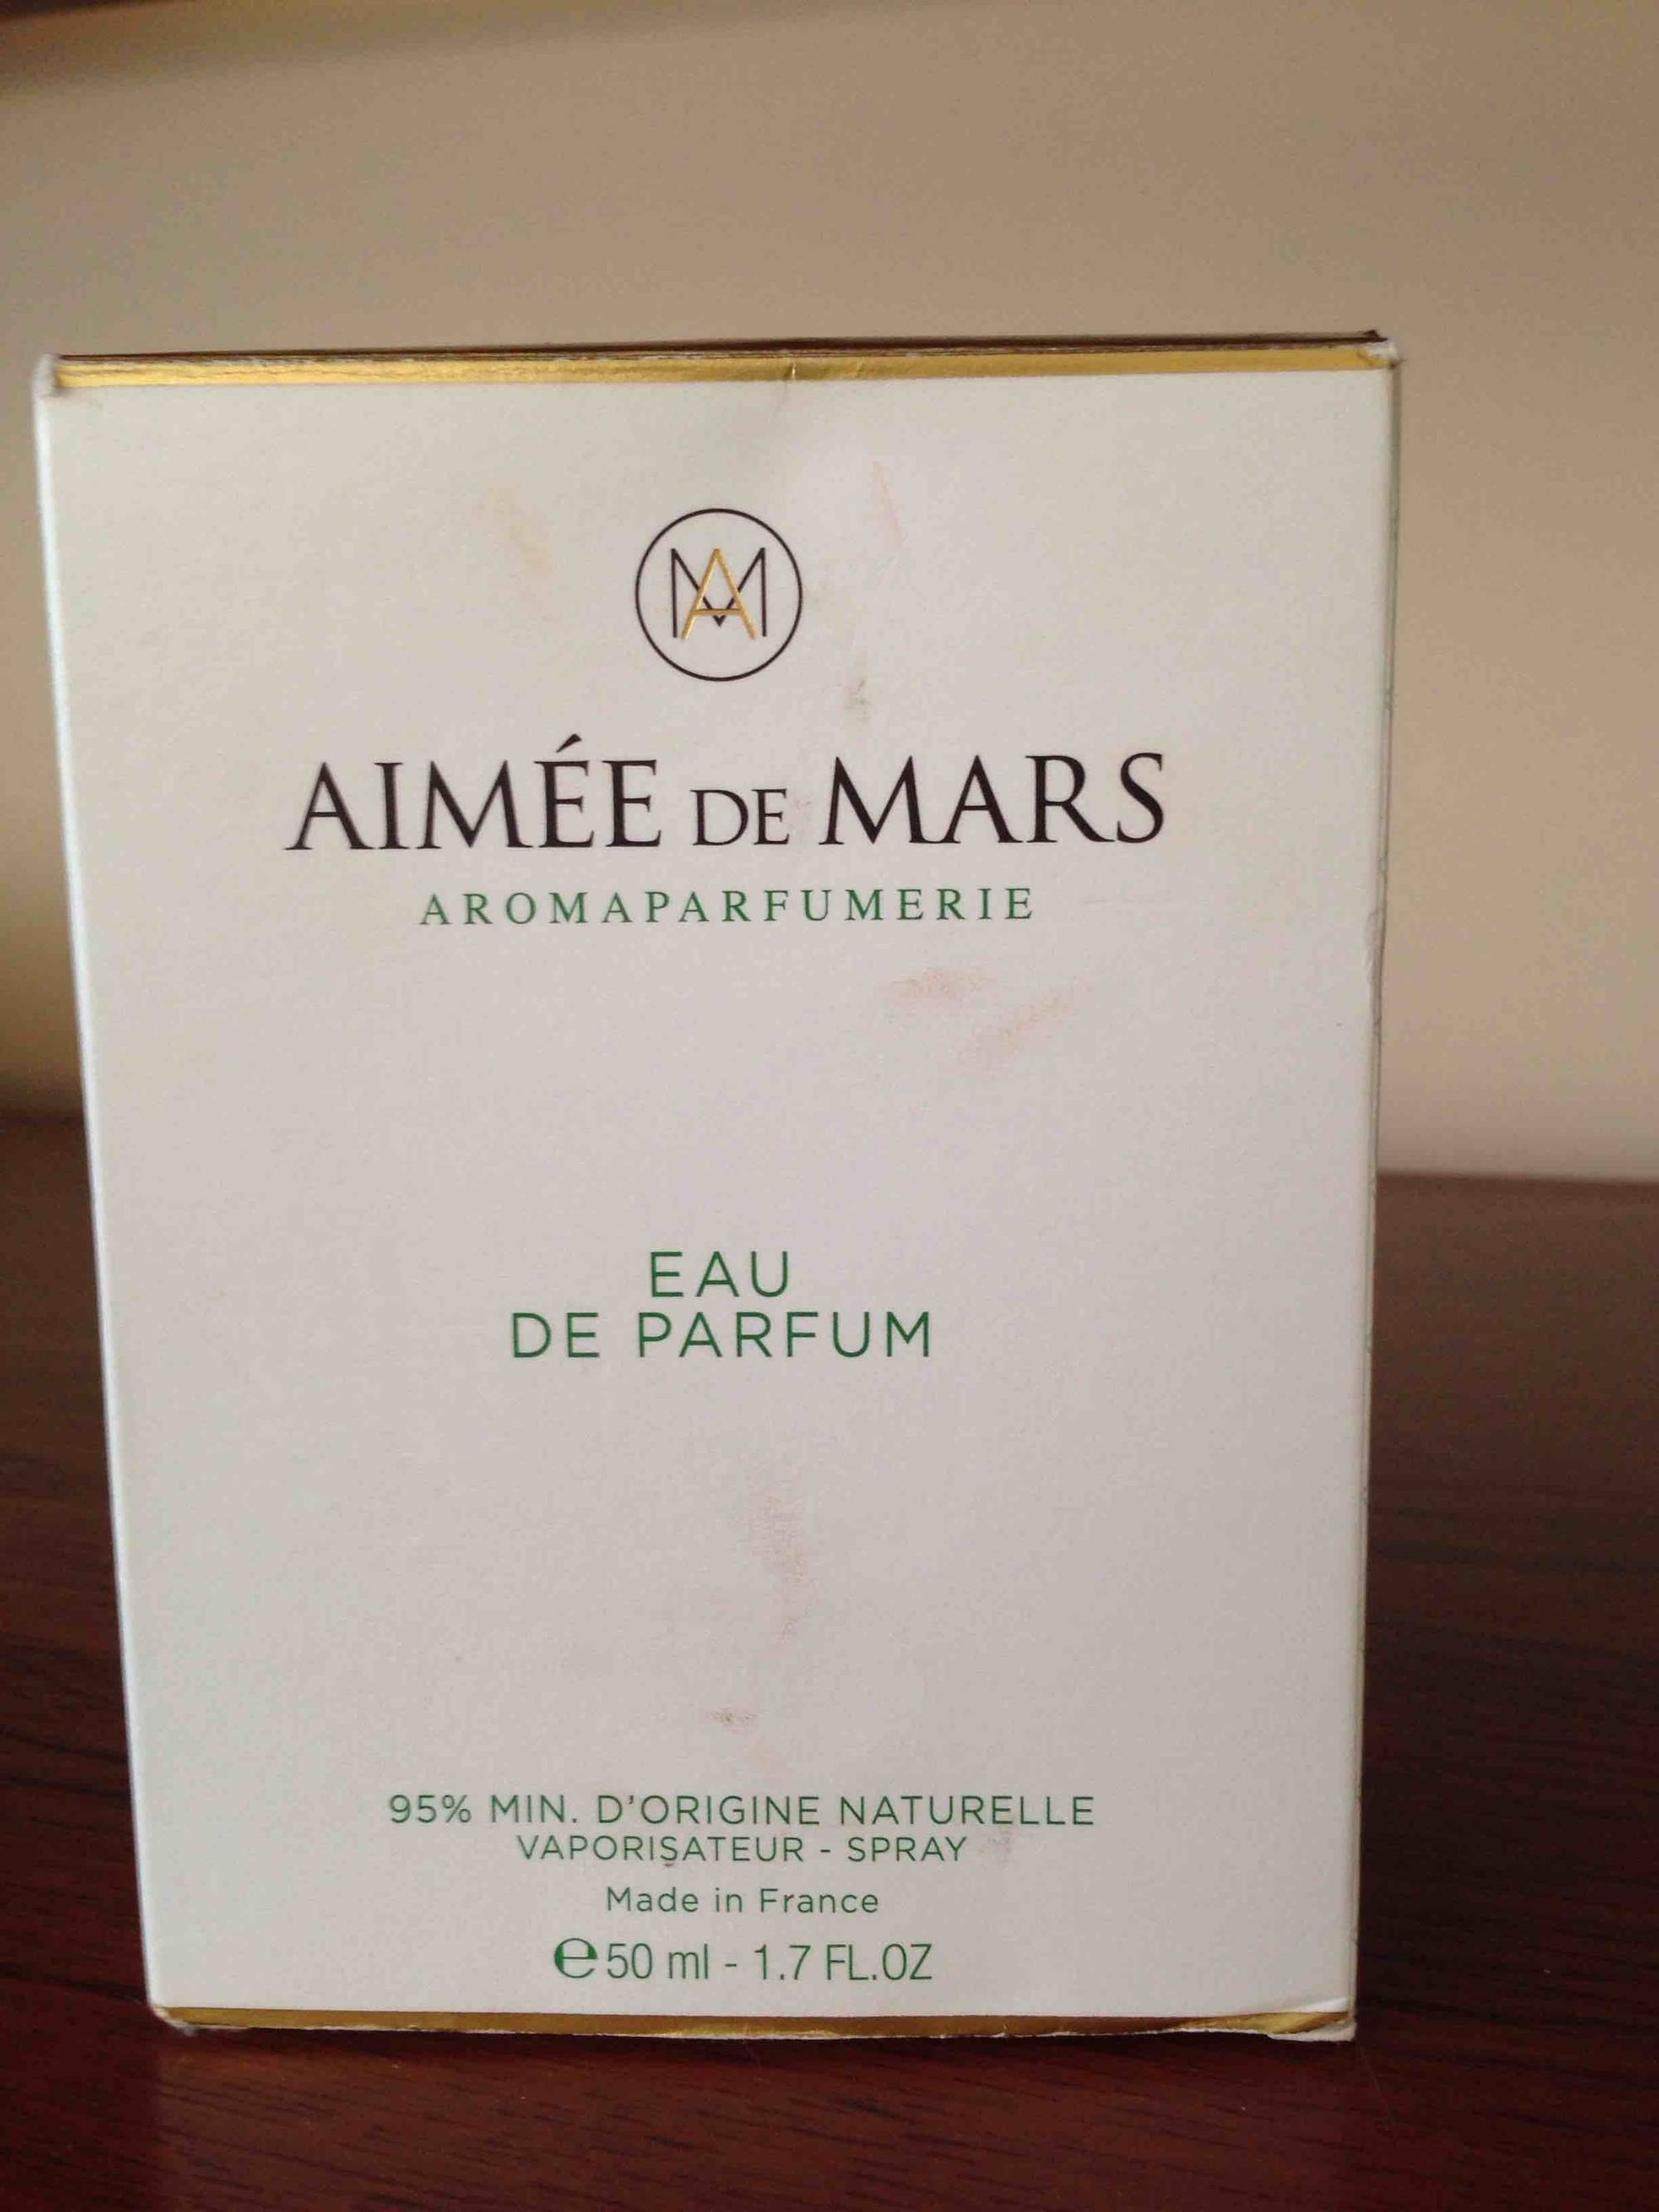 AIMÉE DE MARS - Aromaparfumerie - Eau de parfum